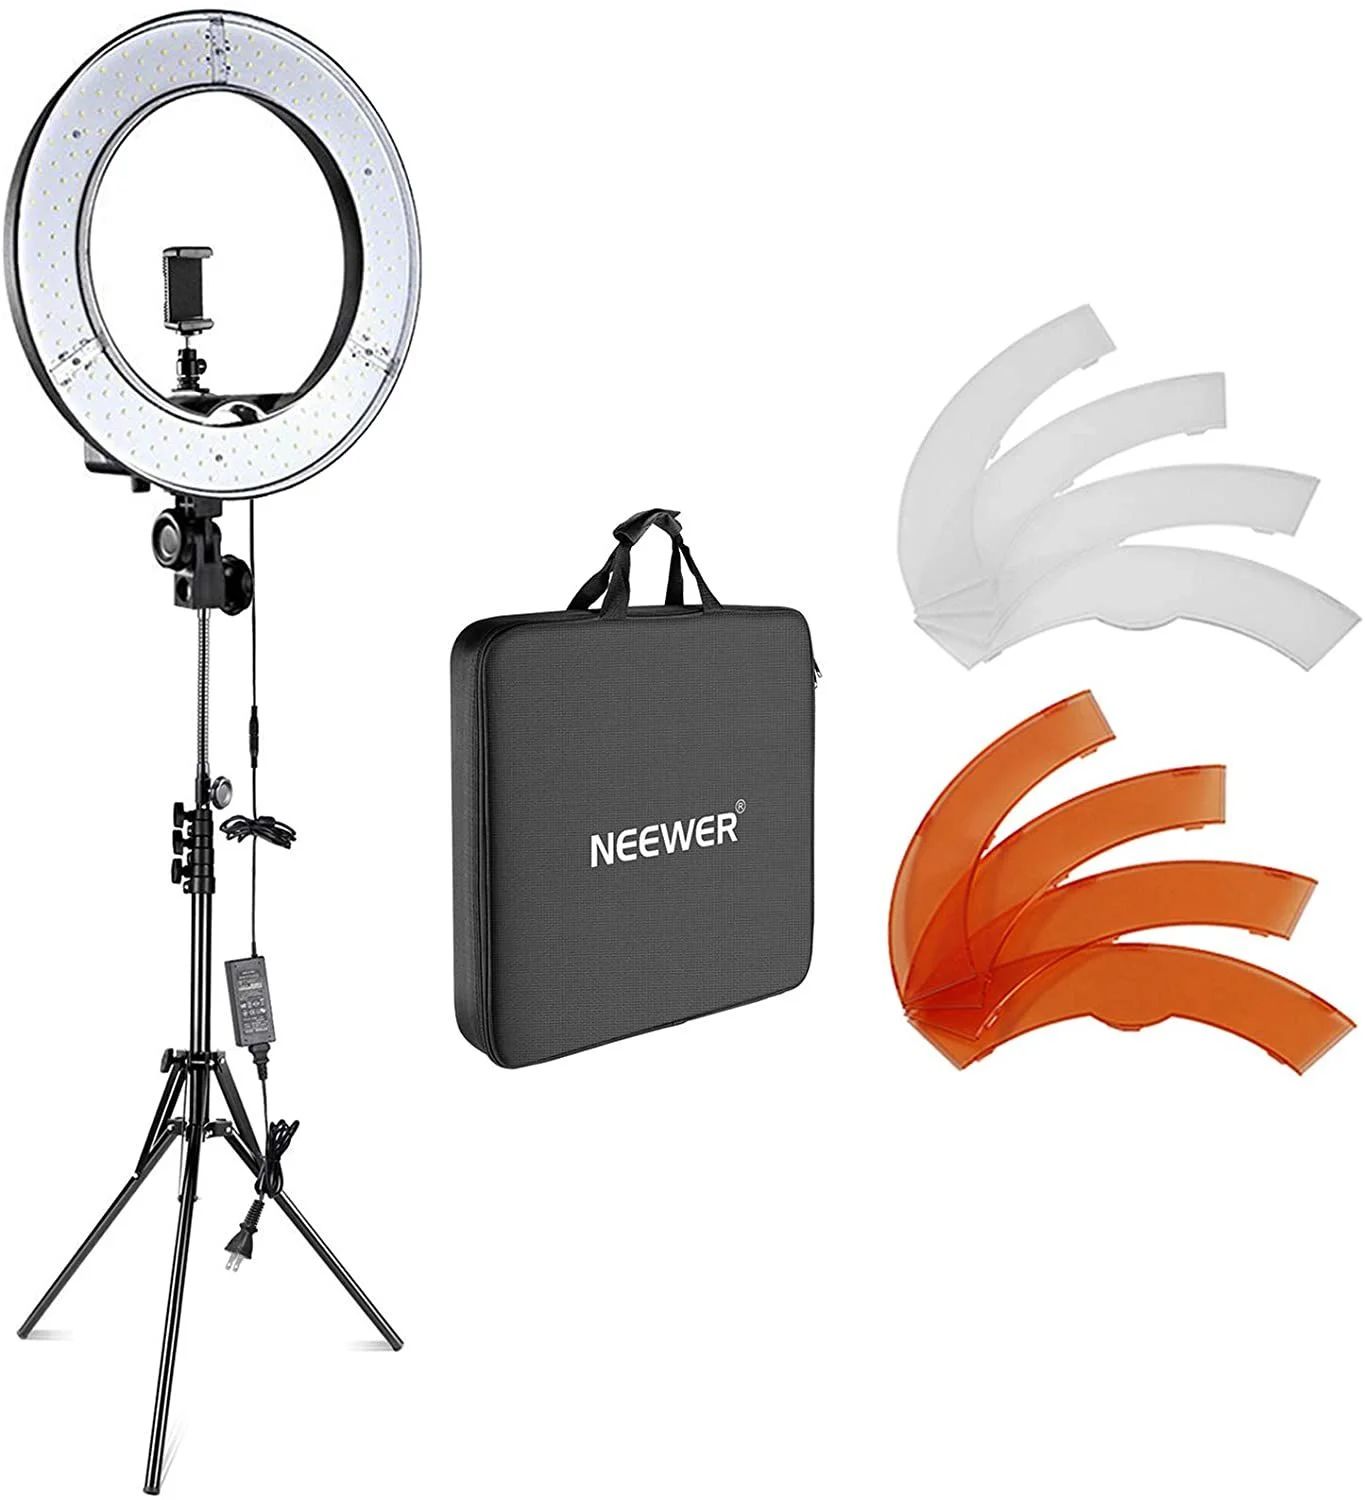 Neewer 18インチLEDリングライト 55W 5500K 調光可能 省エネSMD LED カメラ写真ビデオ用照明セット ライトスタンド、ソフトチューブ付属 生放送/メイクアップ/自撮り/YouTube/tiktok動画撮影用